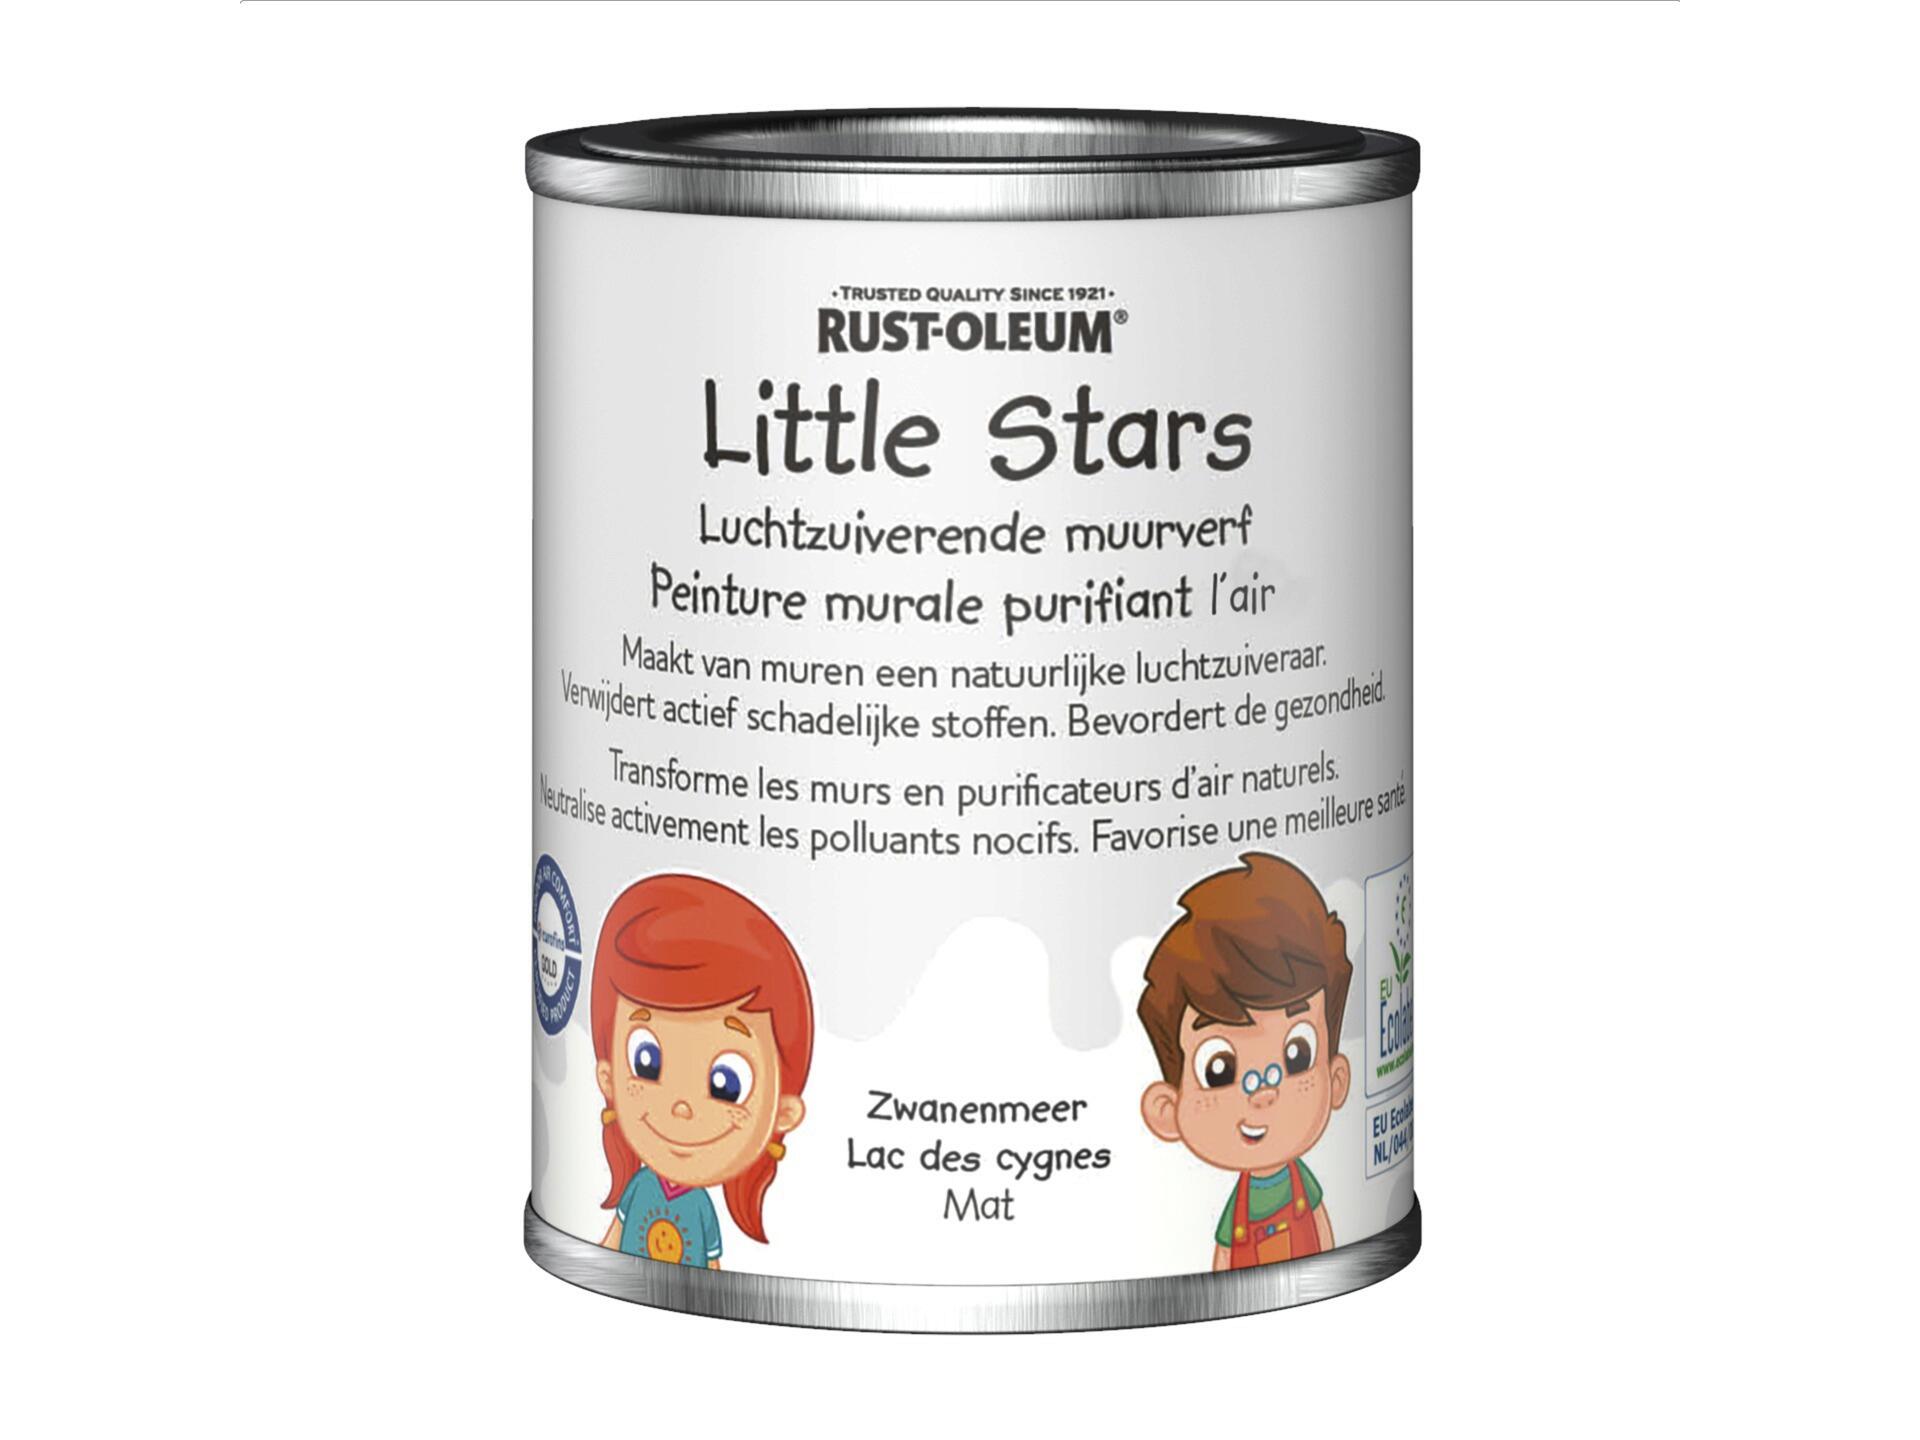 Rust-oleum Little Stars luchtzuiverende muurverf 125ml zwanenmeer